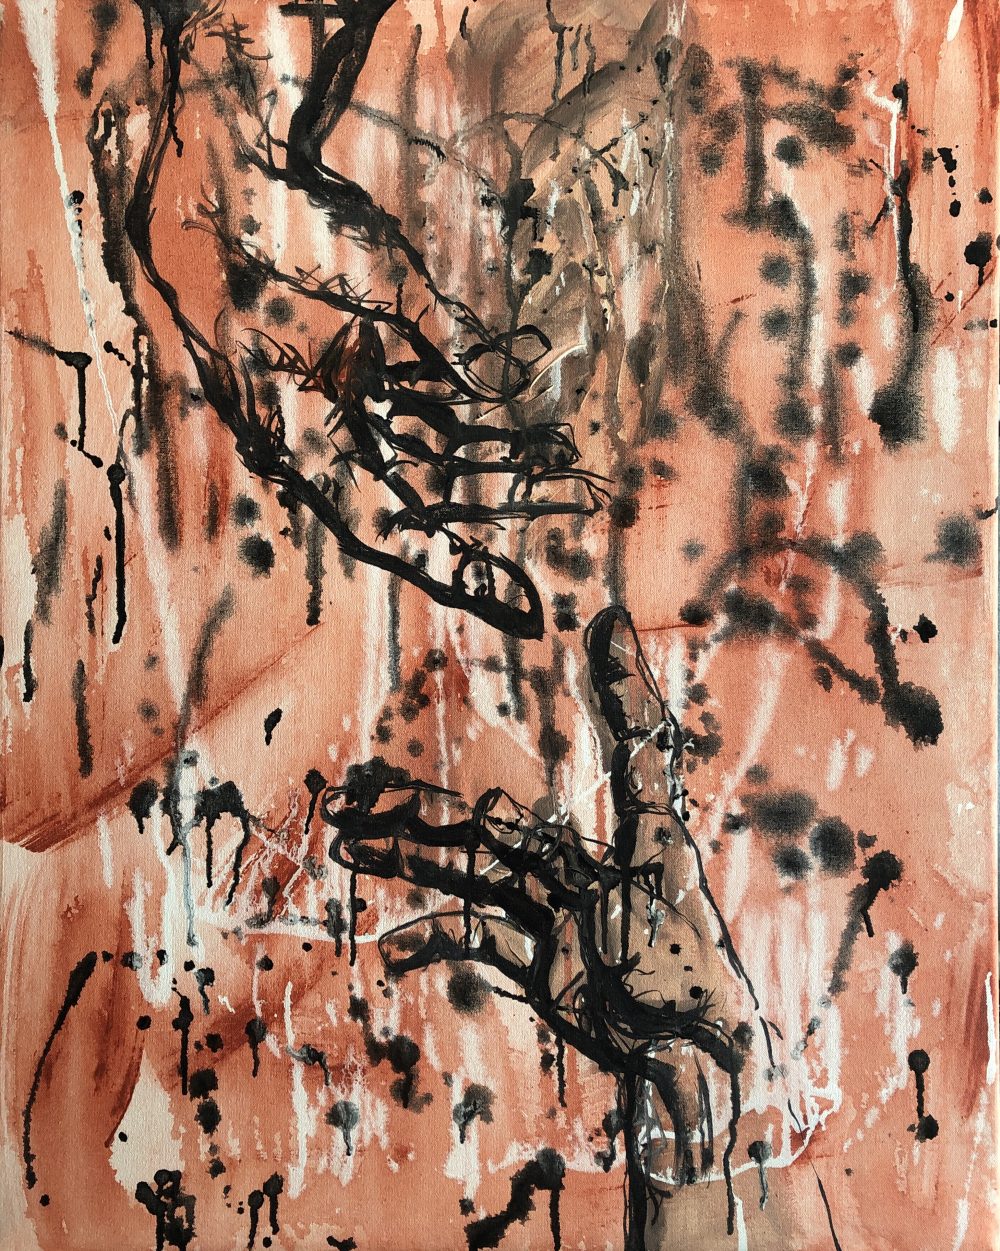 Jade Kroskey, Pollock x Michelangelo, 2020, acrylic on canvas, 30" x 24"